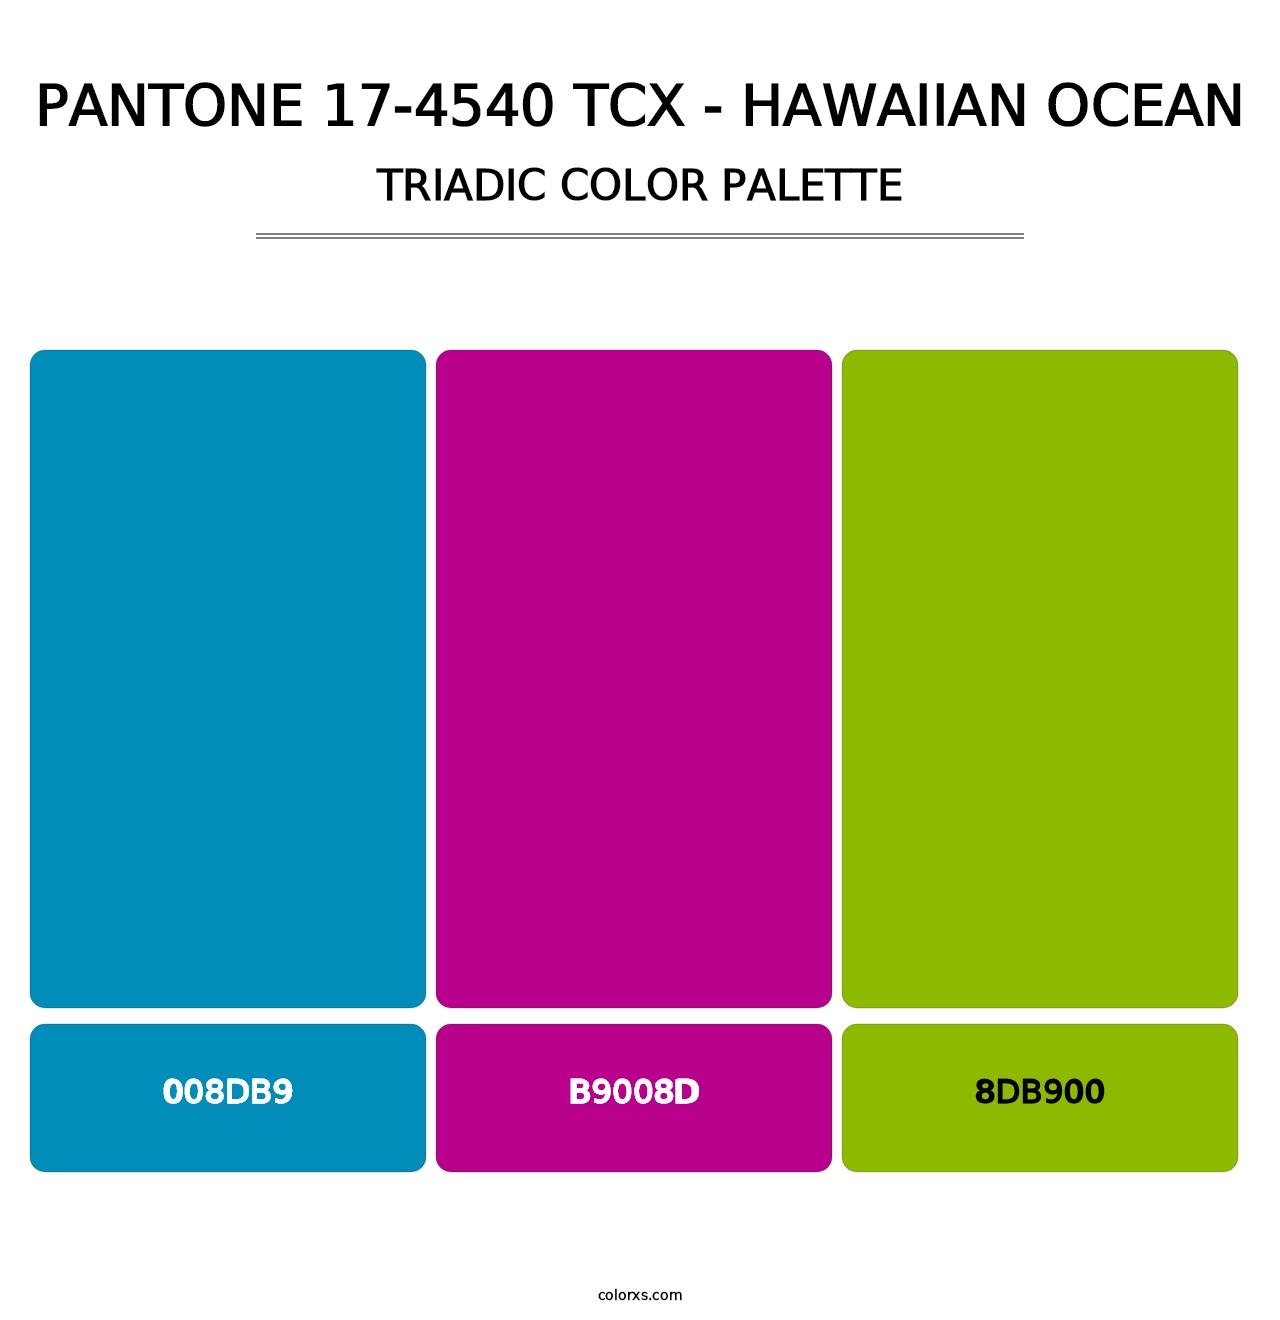 PANTONE 17-4540 TCX - Hawaiian Ocean - Triadic Color Palette